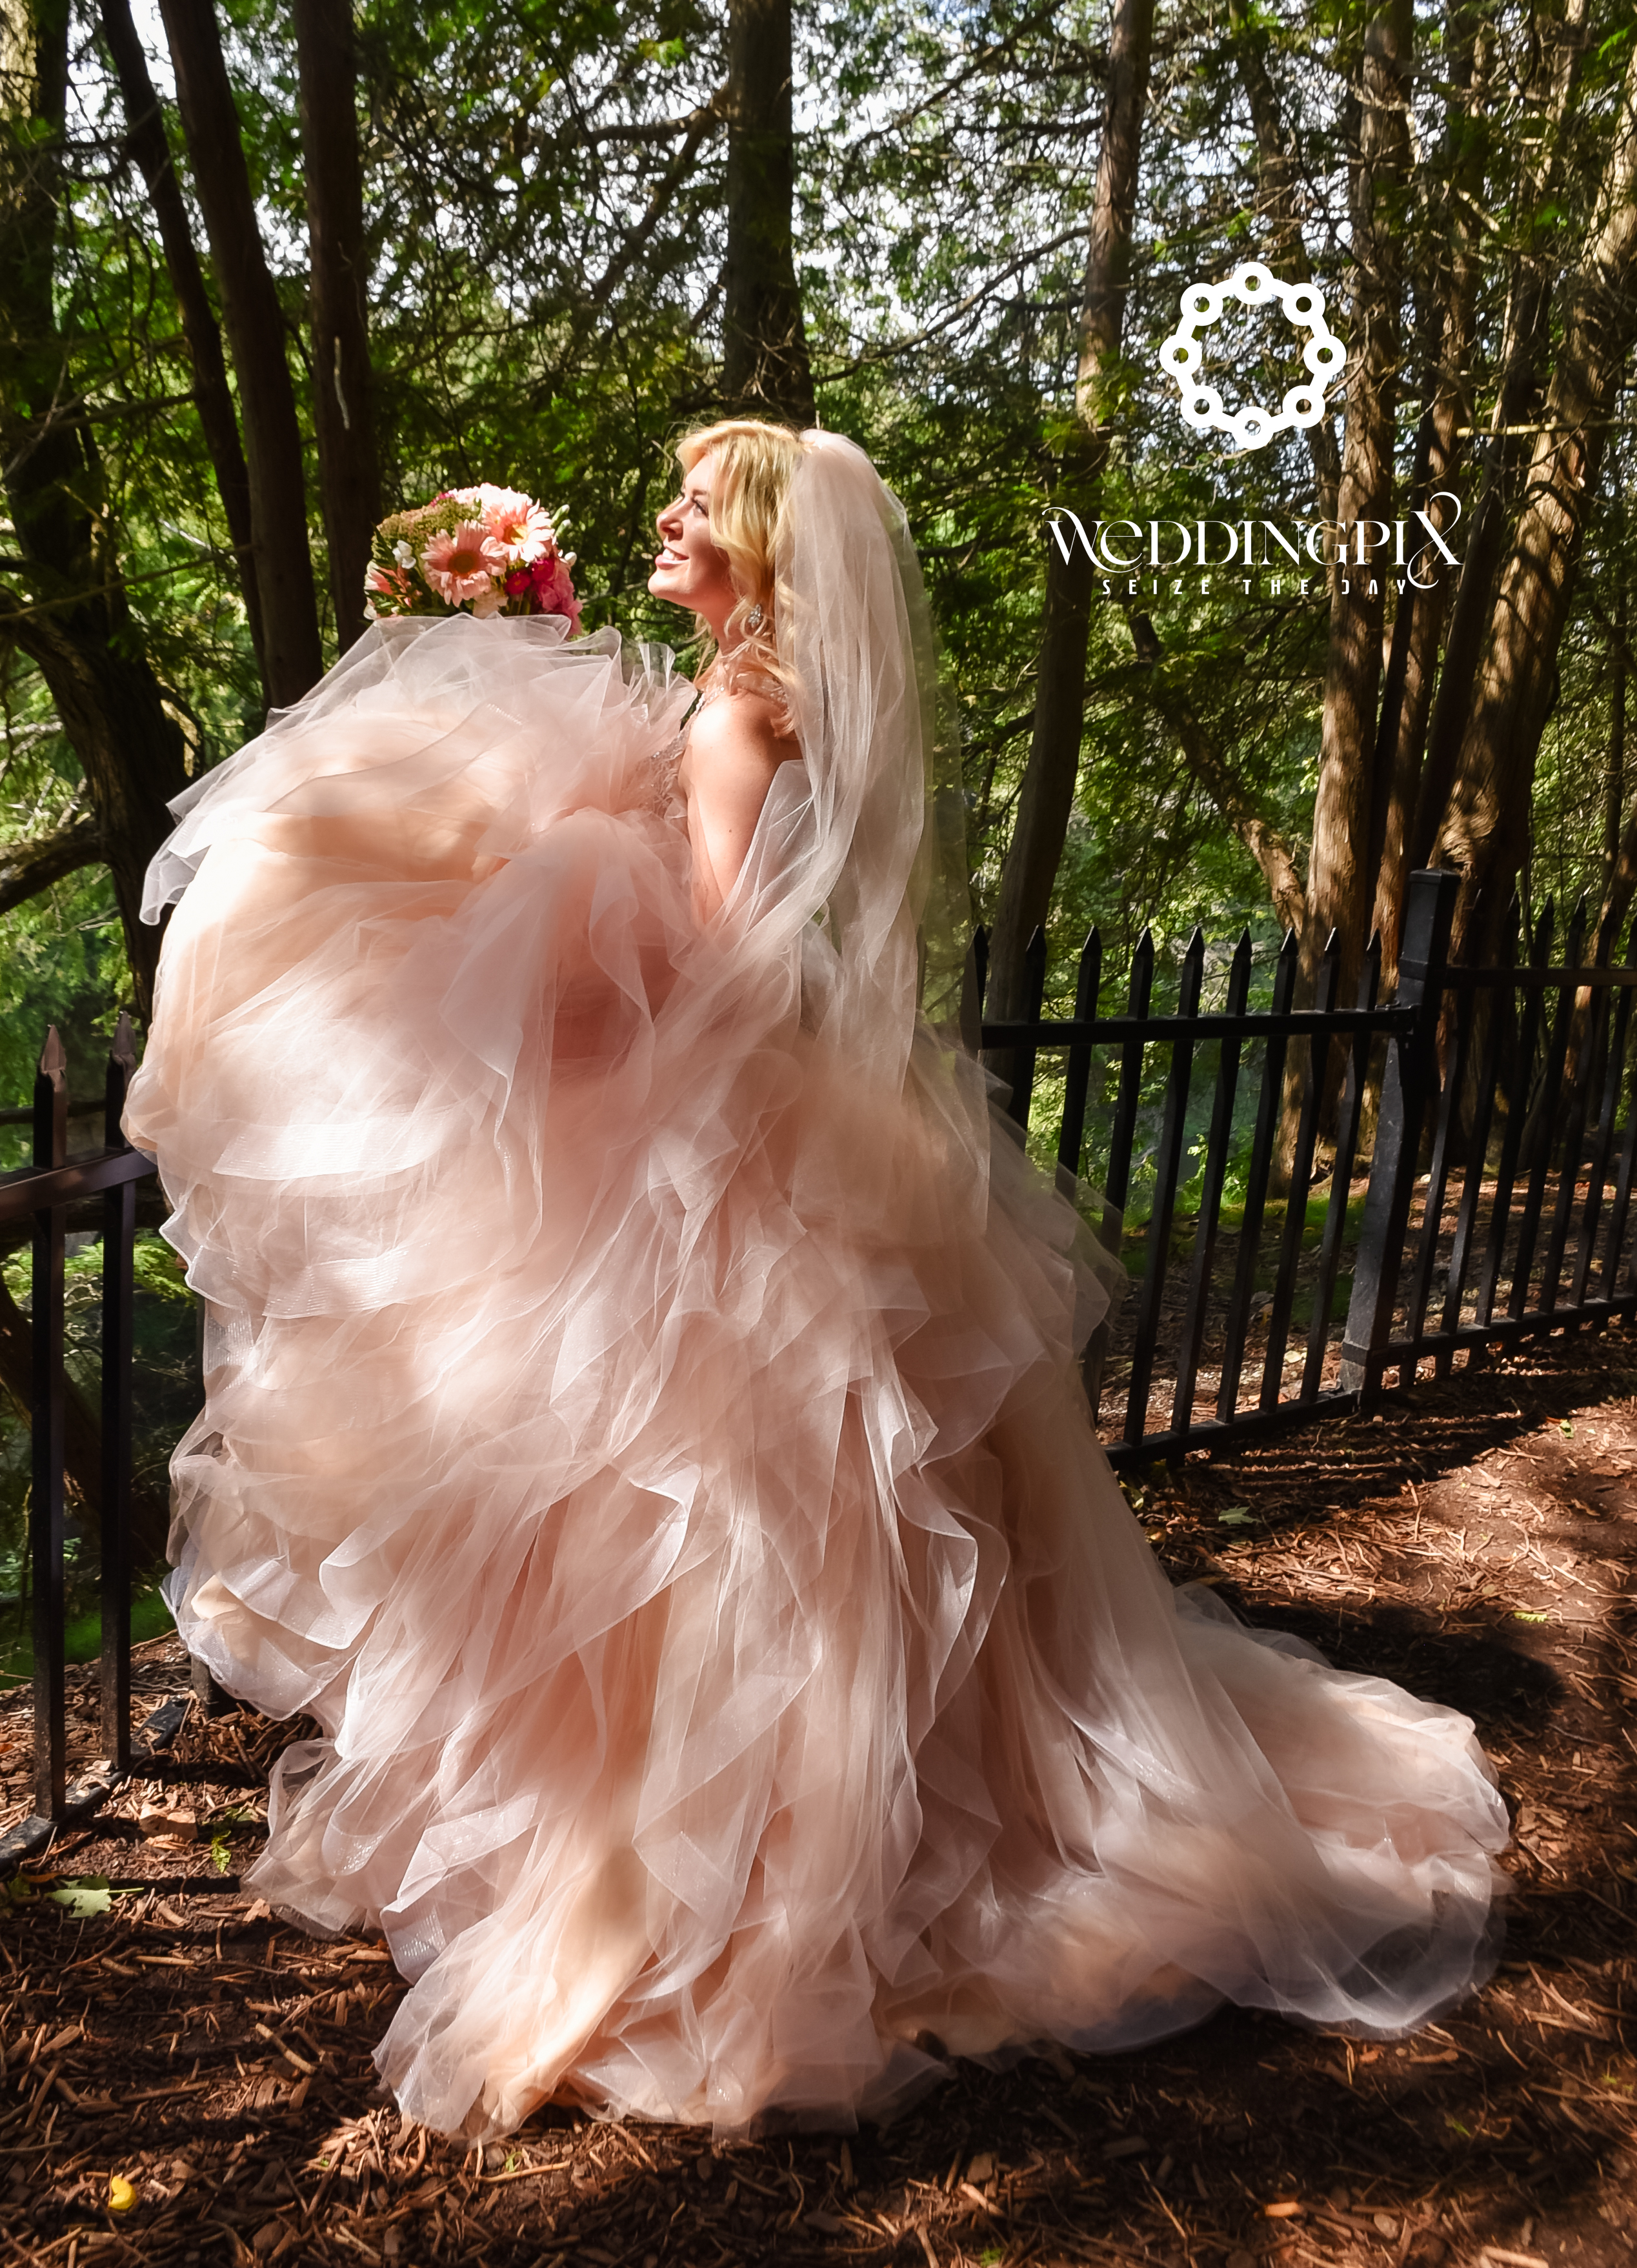 Kitchener-Waterloo bride in beautiful pink wedding dress poses for wedding photographer